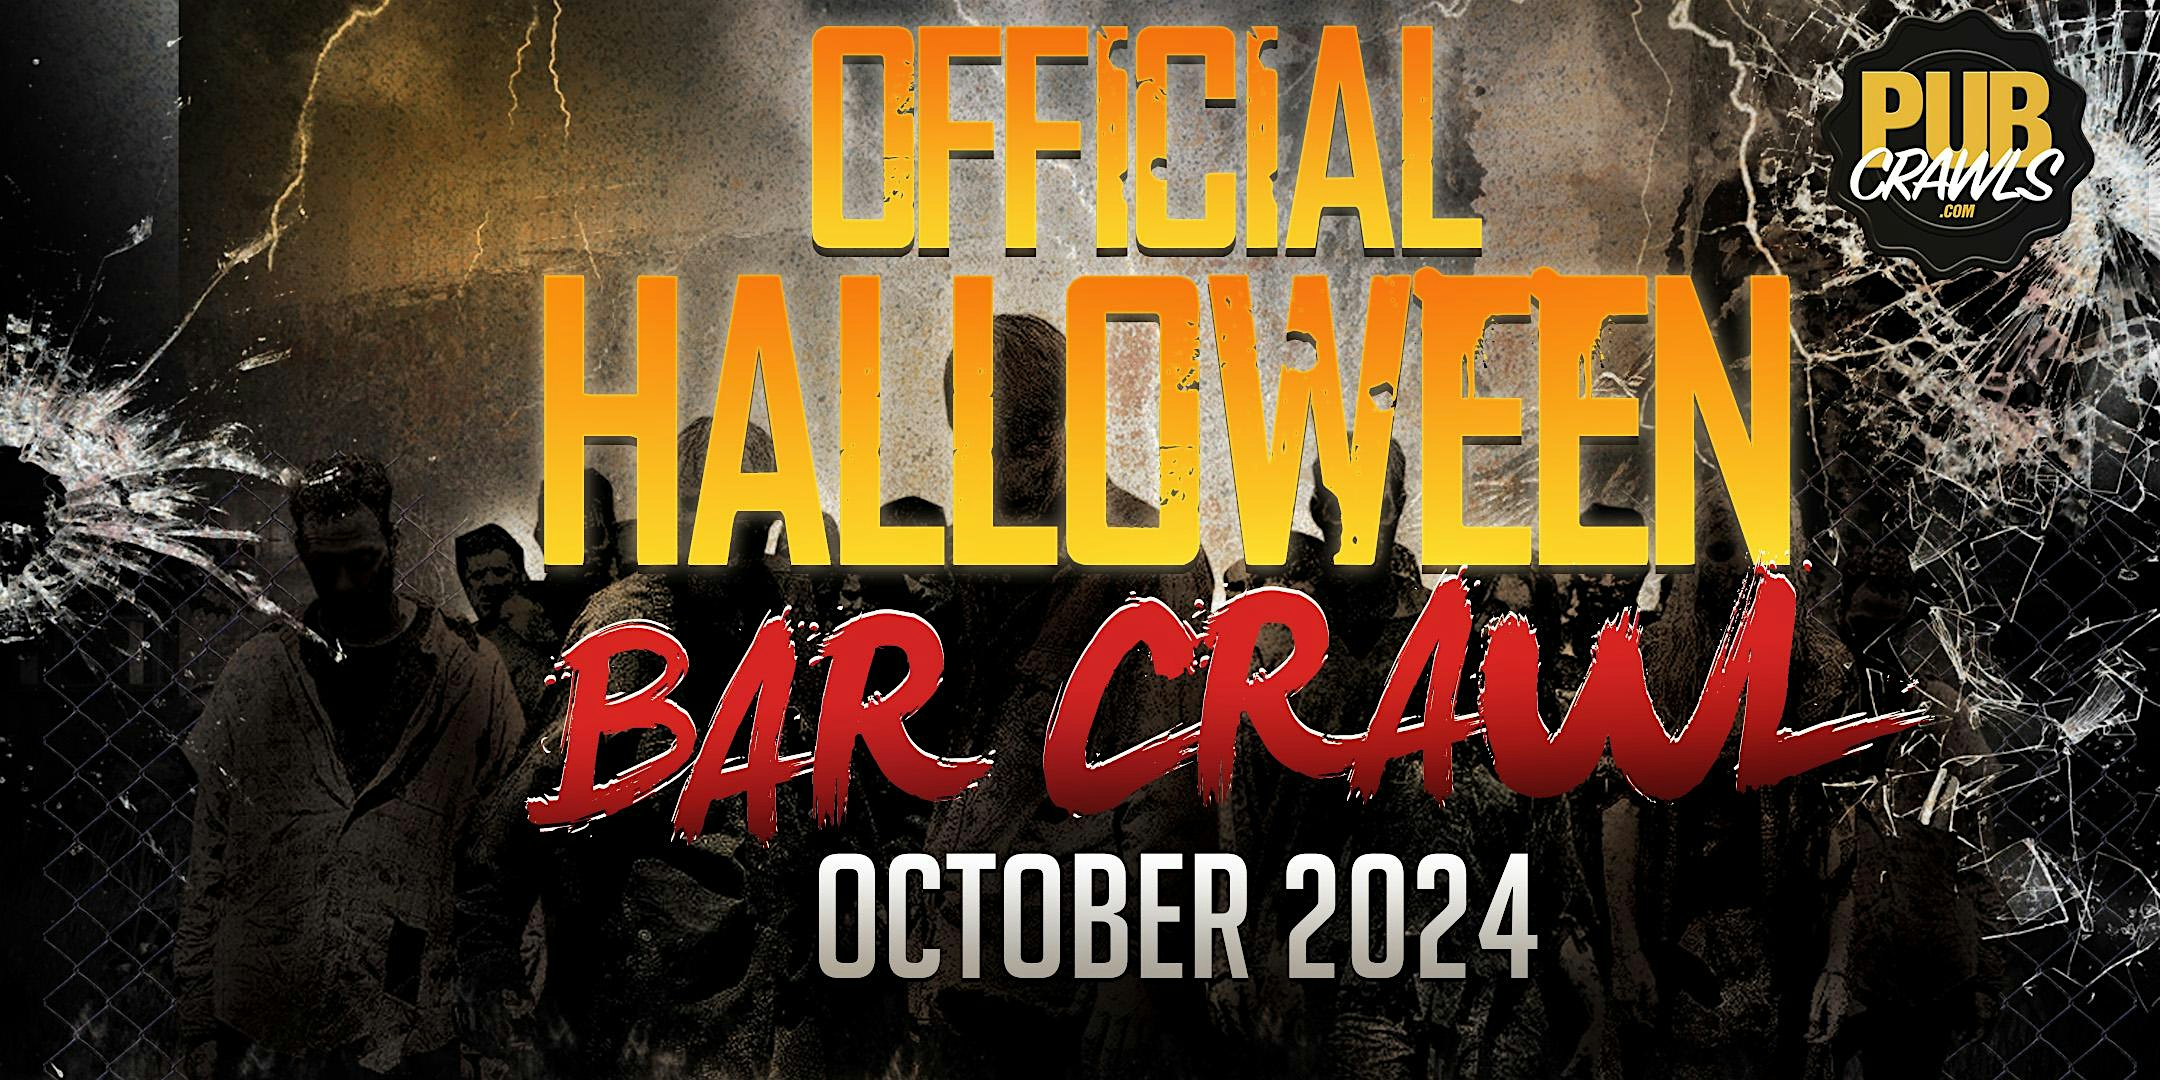 Santa Cruz Official Halloween Bar Crawl